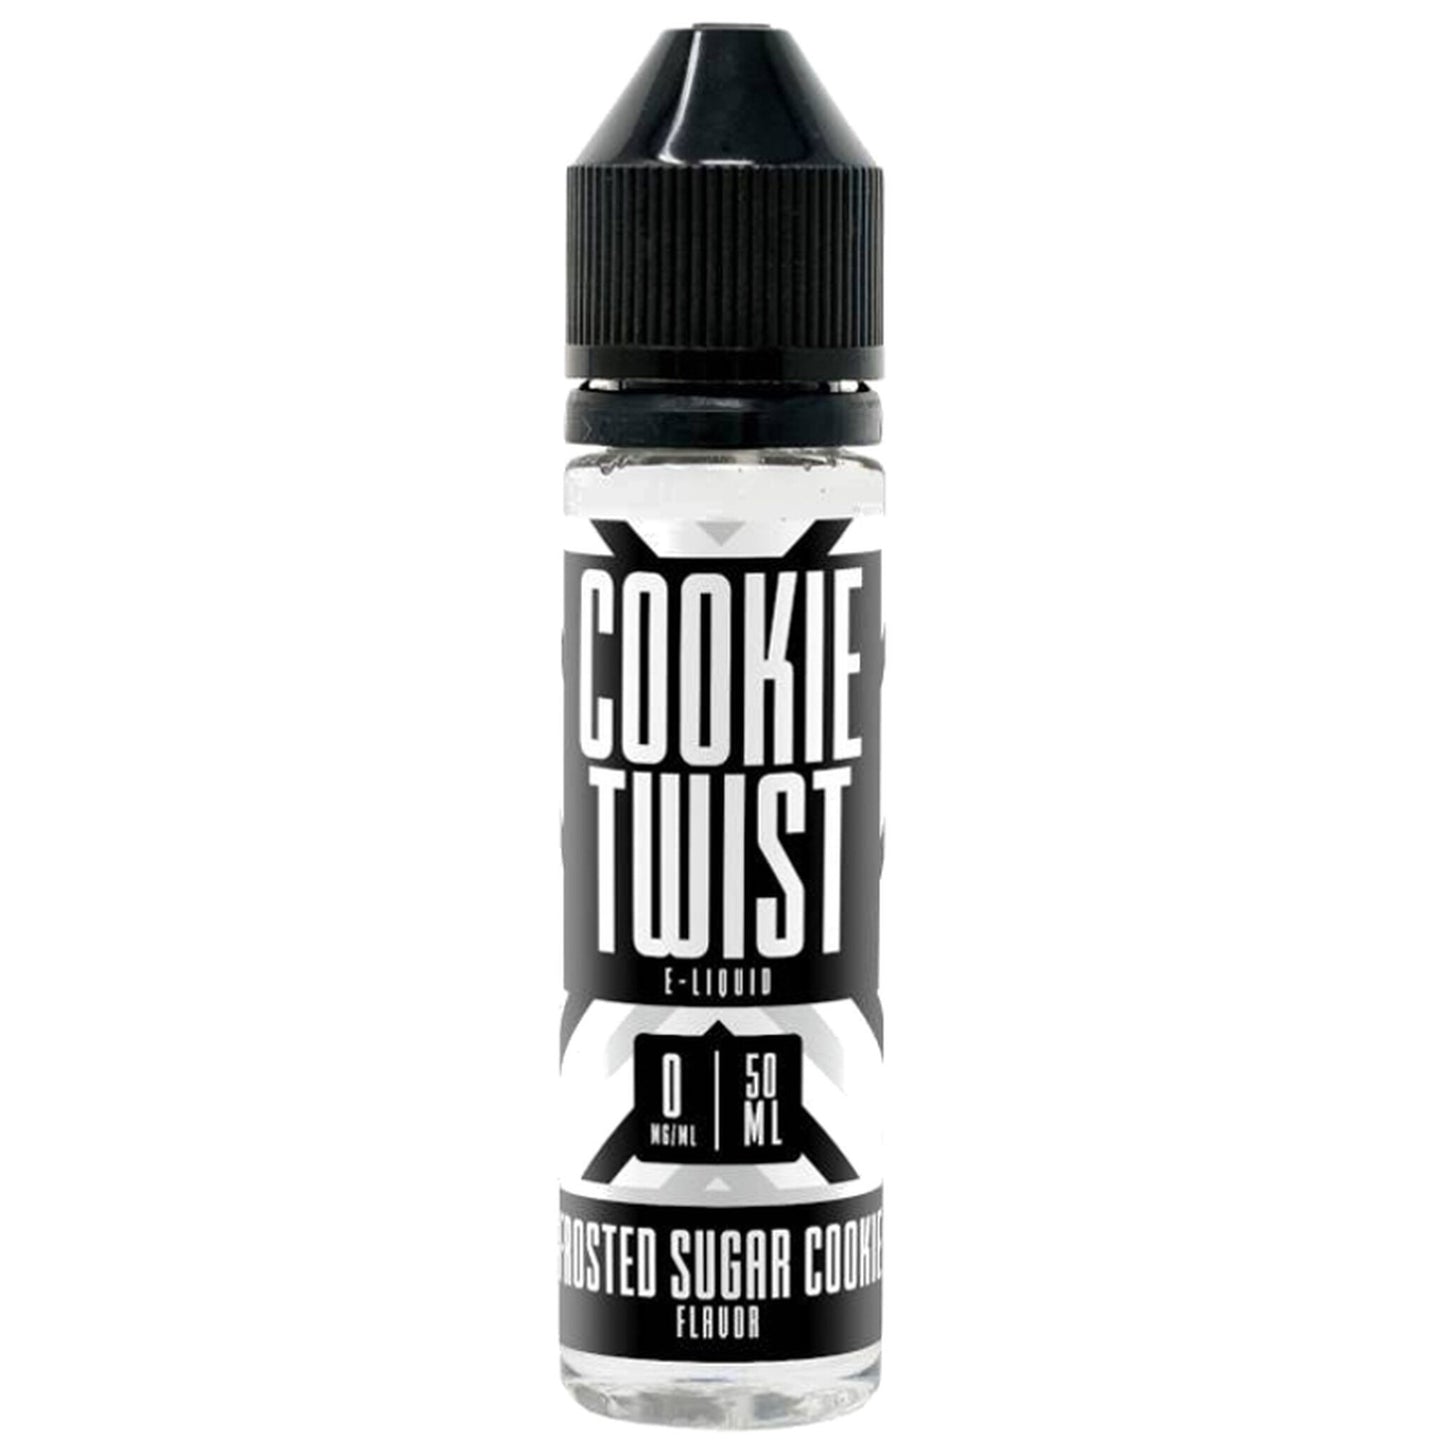 Cookie Twist E-Liquid - Frosted Sugar Cookie - MI VAPE CO 